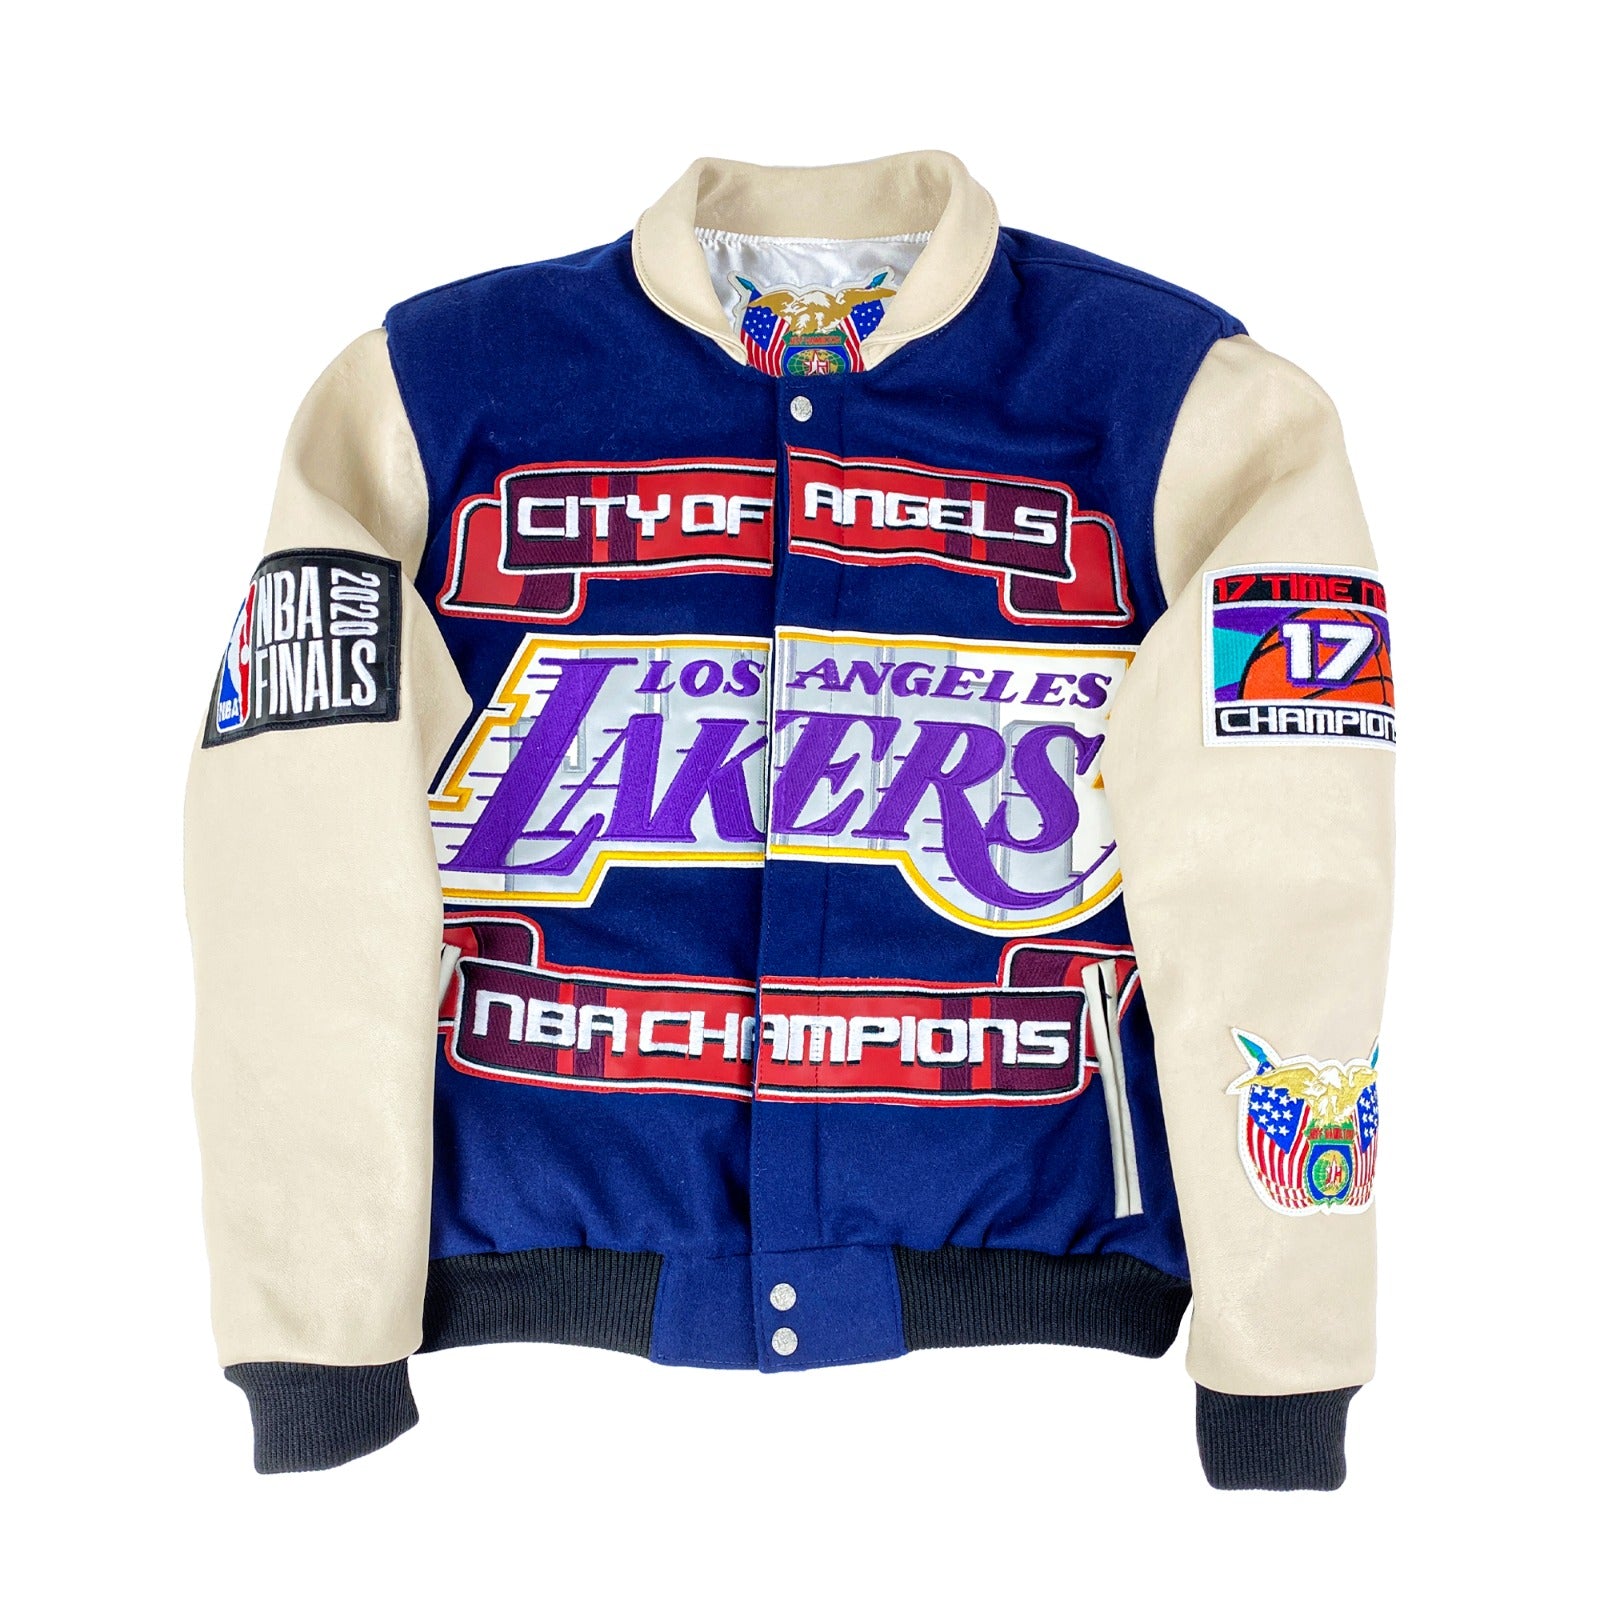 Lakers Championship 2020 Jacket